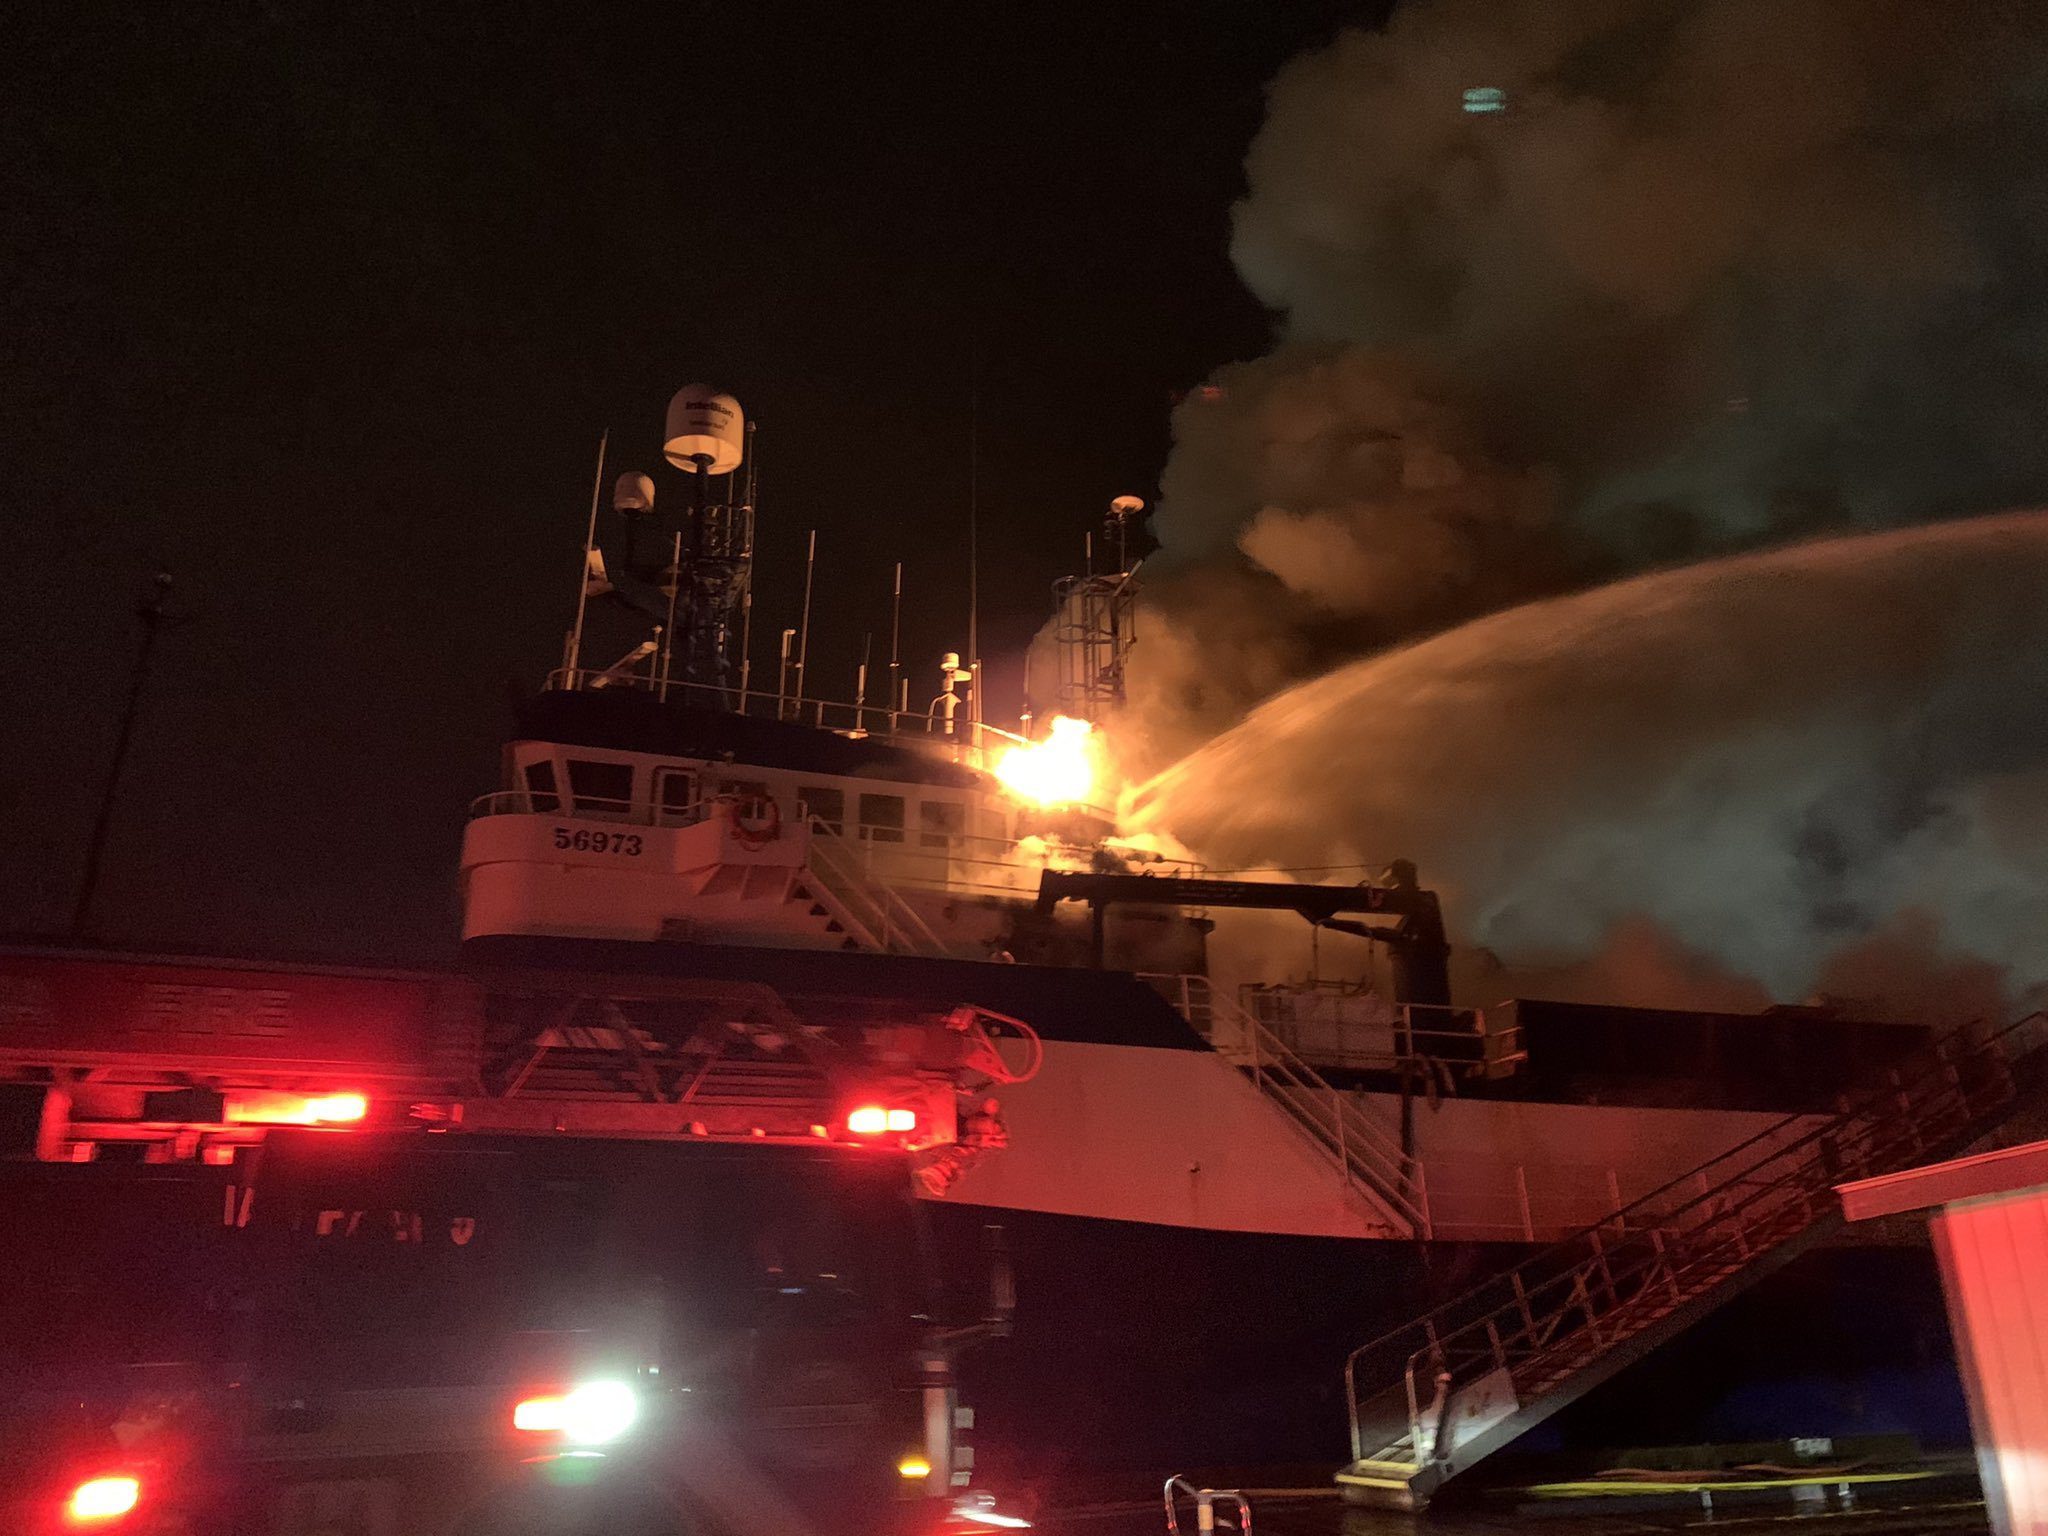 Commercial Fishing Vessel Burning at Tacoma, Washington Pier